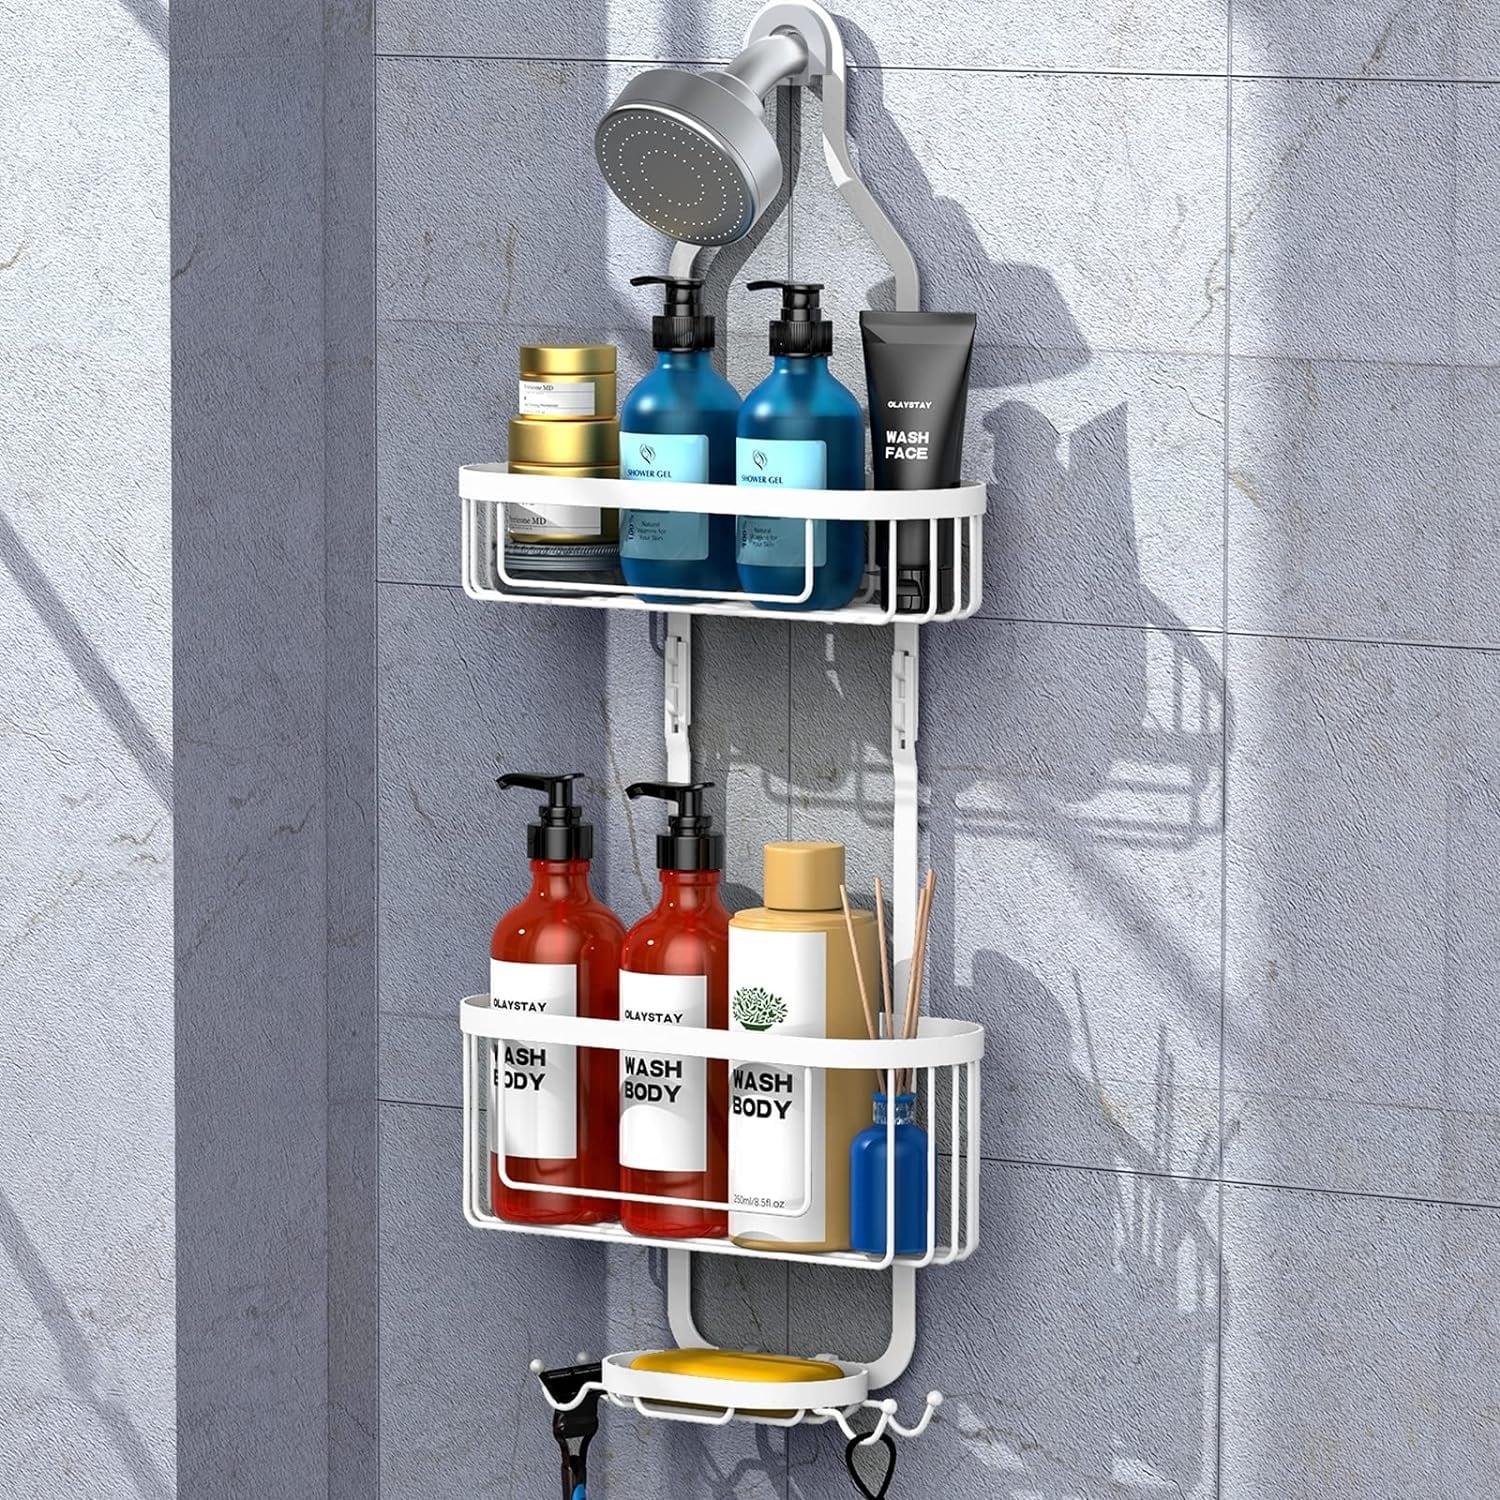 Shower Caddy Hanging over Shower Head Rust Roof Shower Organizer with 10  Hooks for Razor Shampoo Holder Bathroom Shower Rack Storage Shelf with  Towel